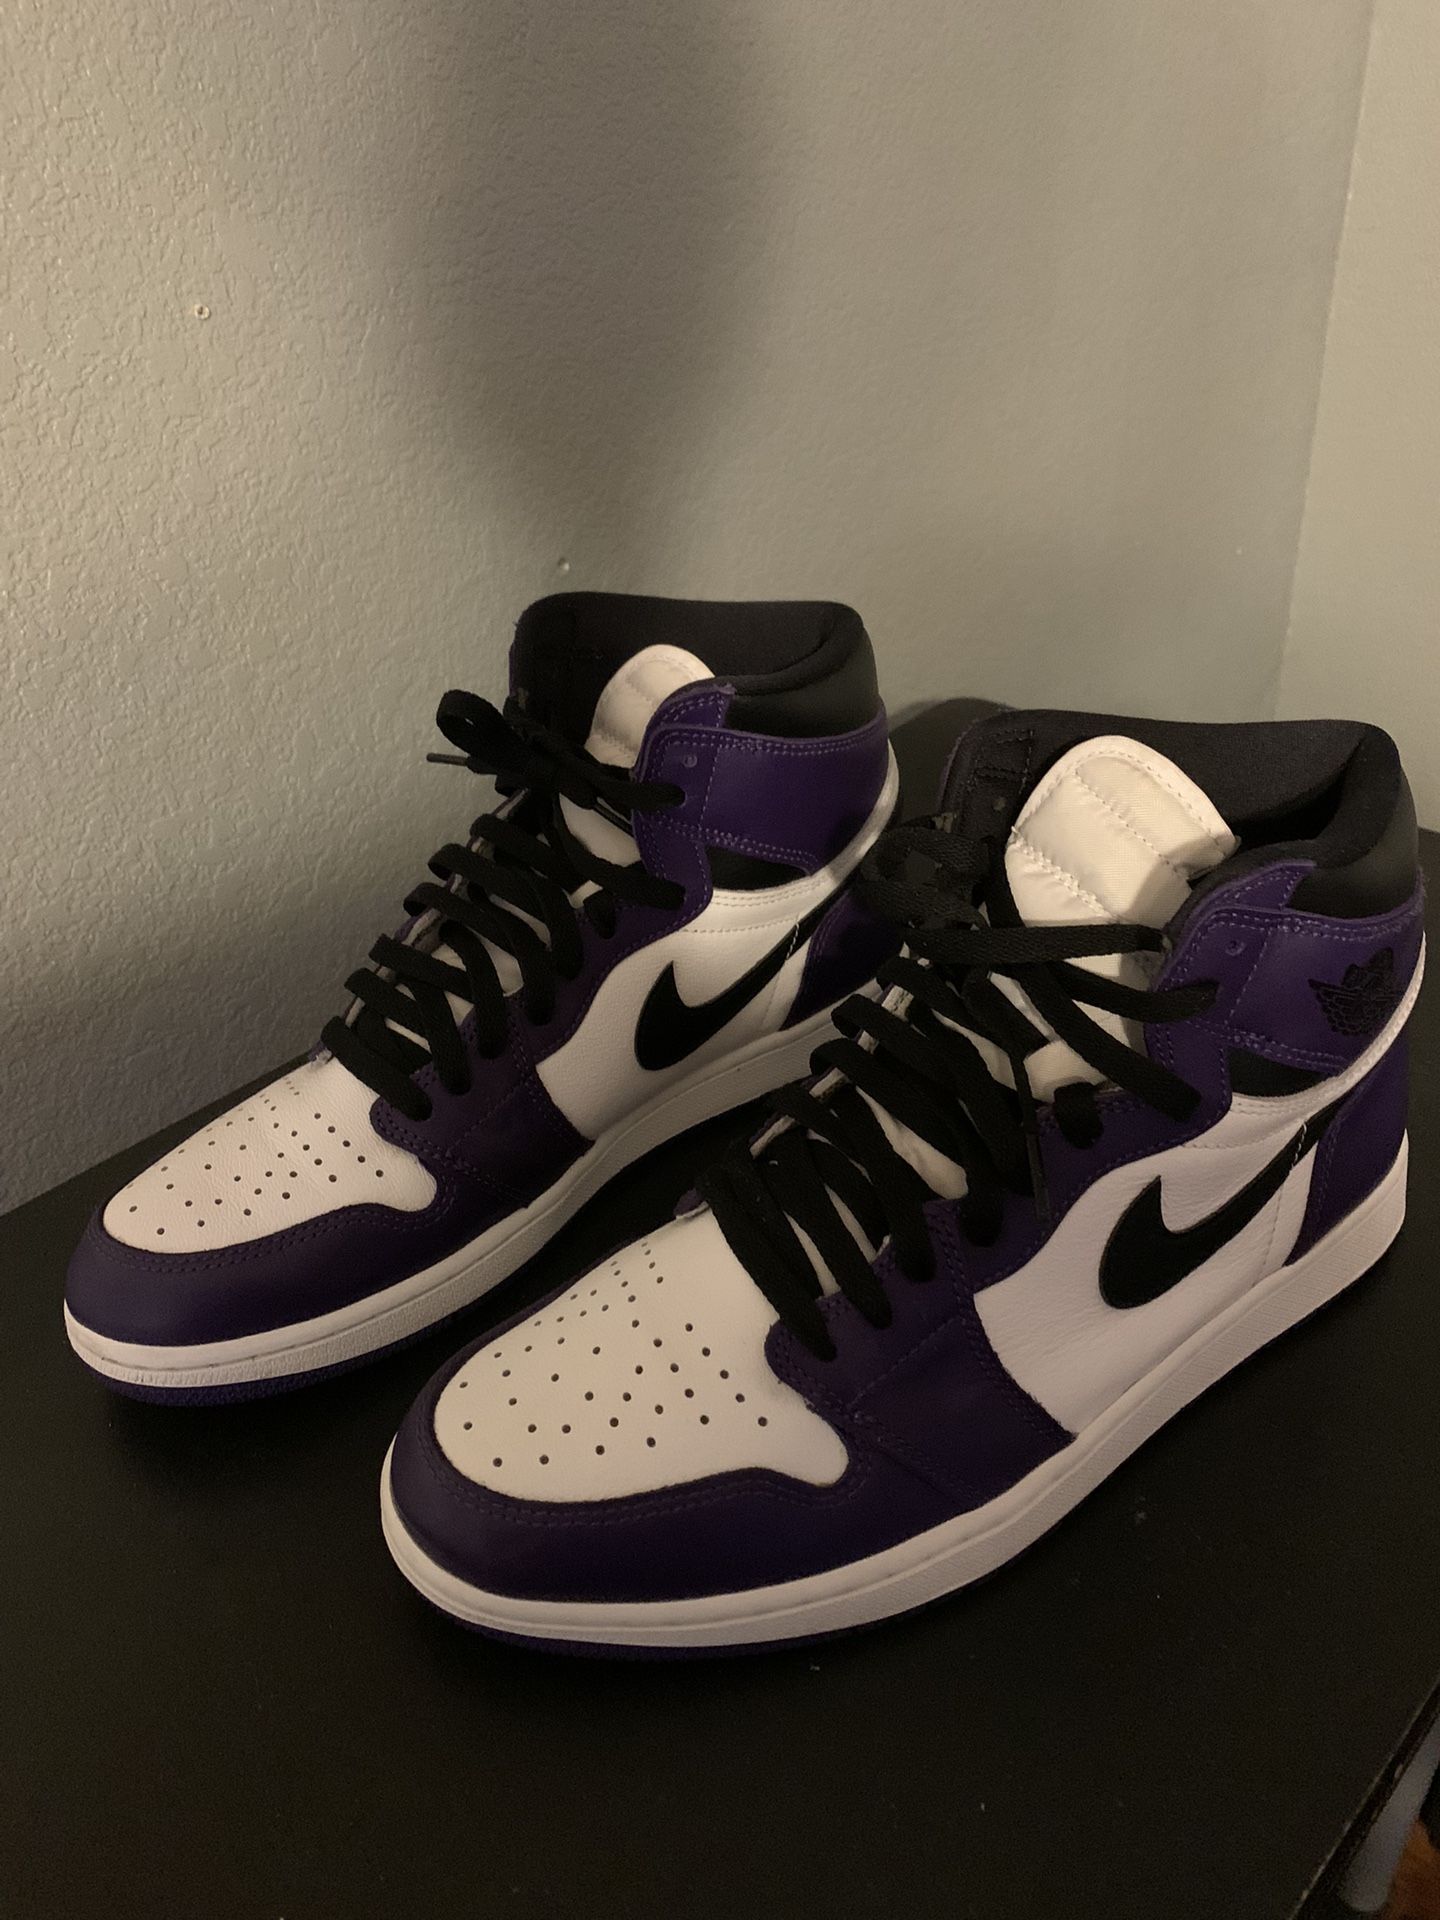 Jordan 1 Court Purple High